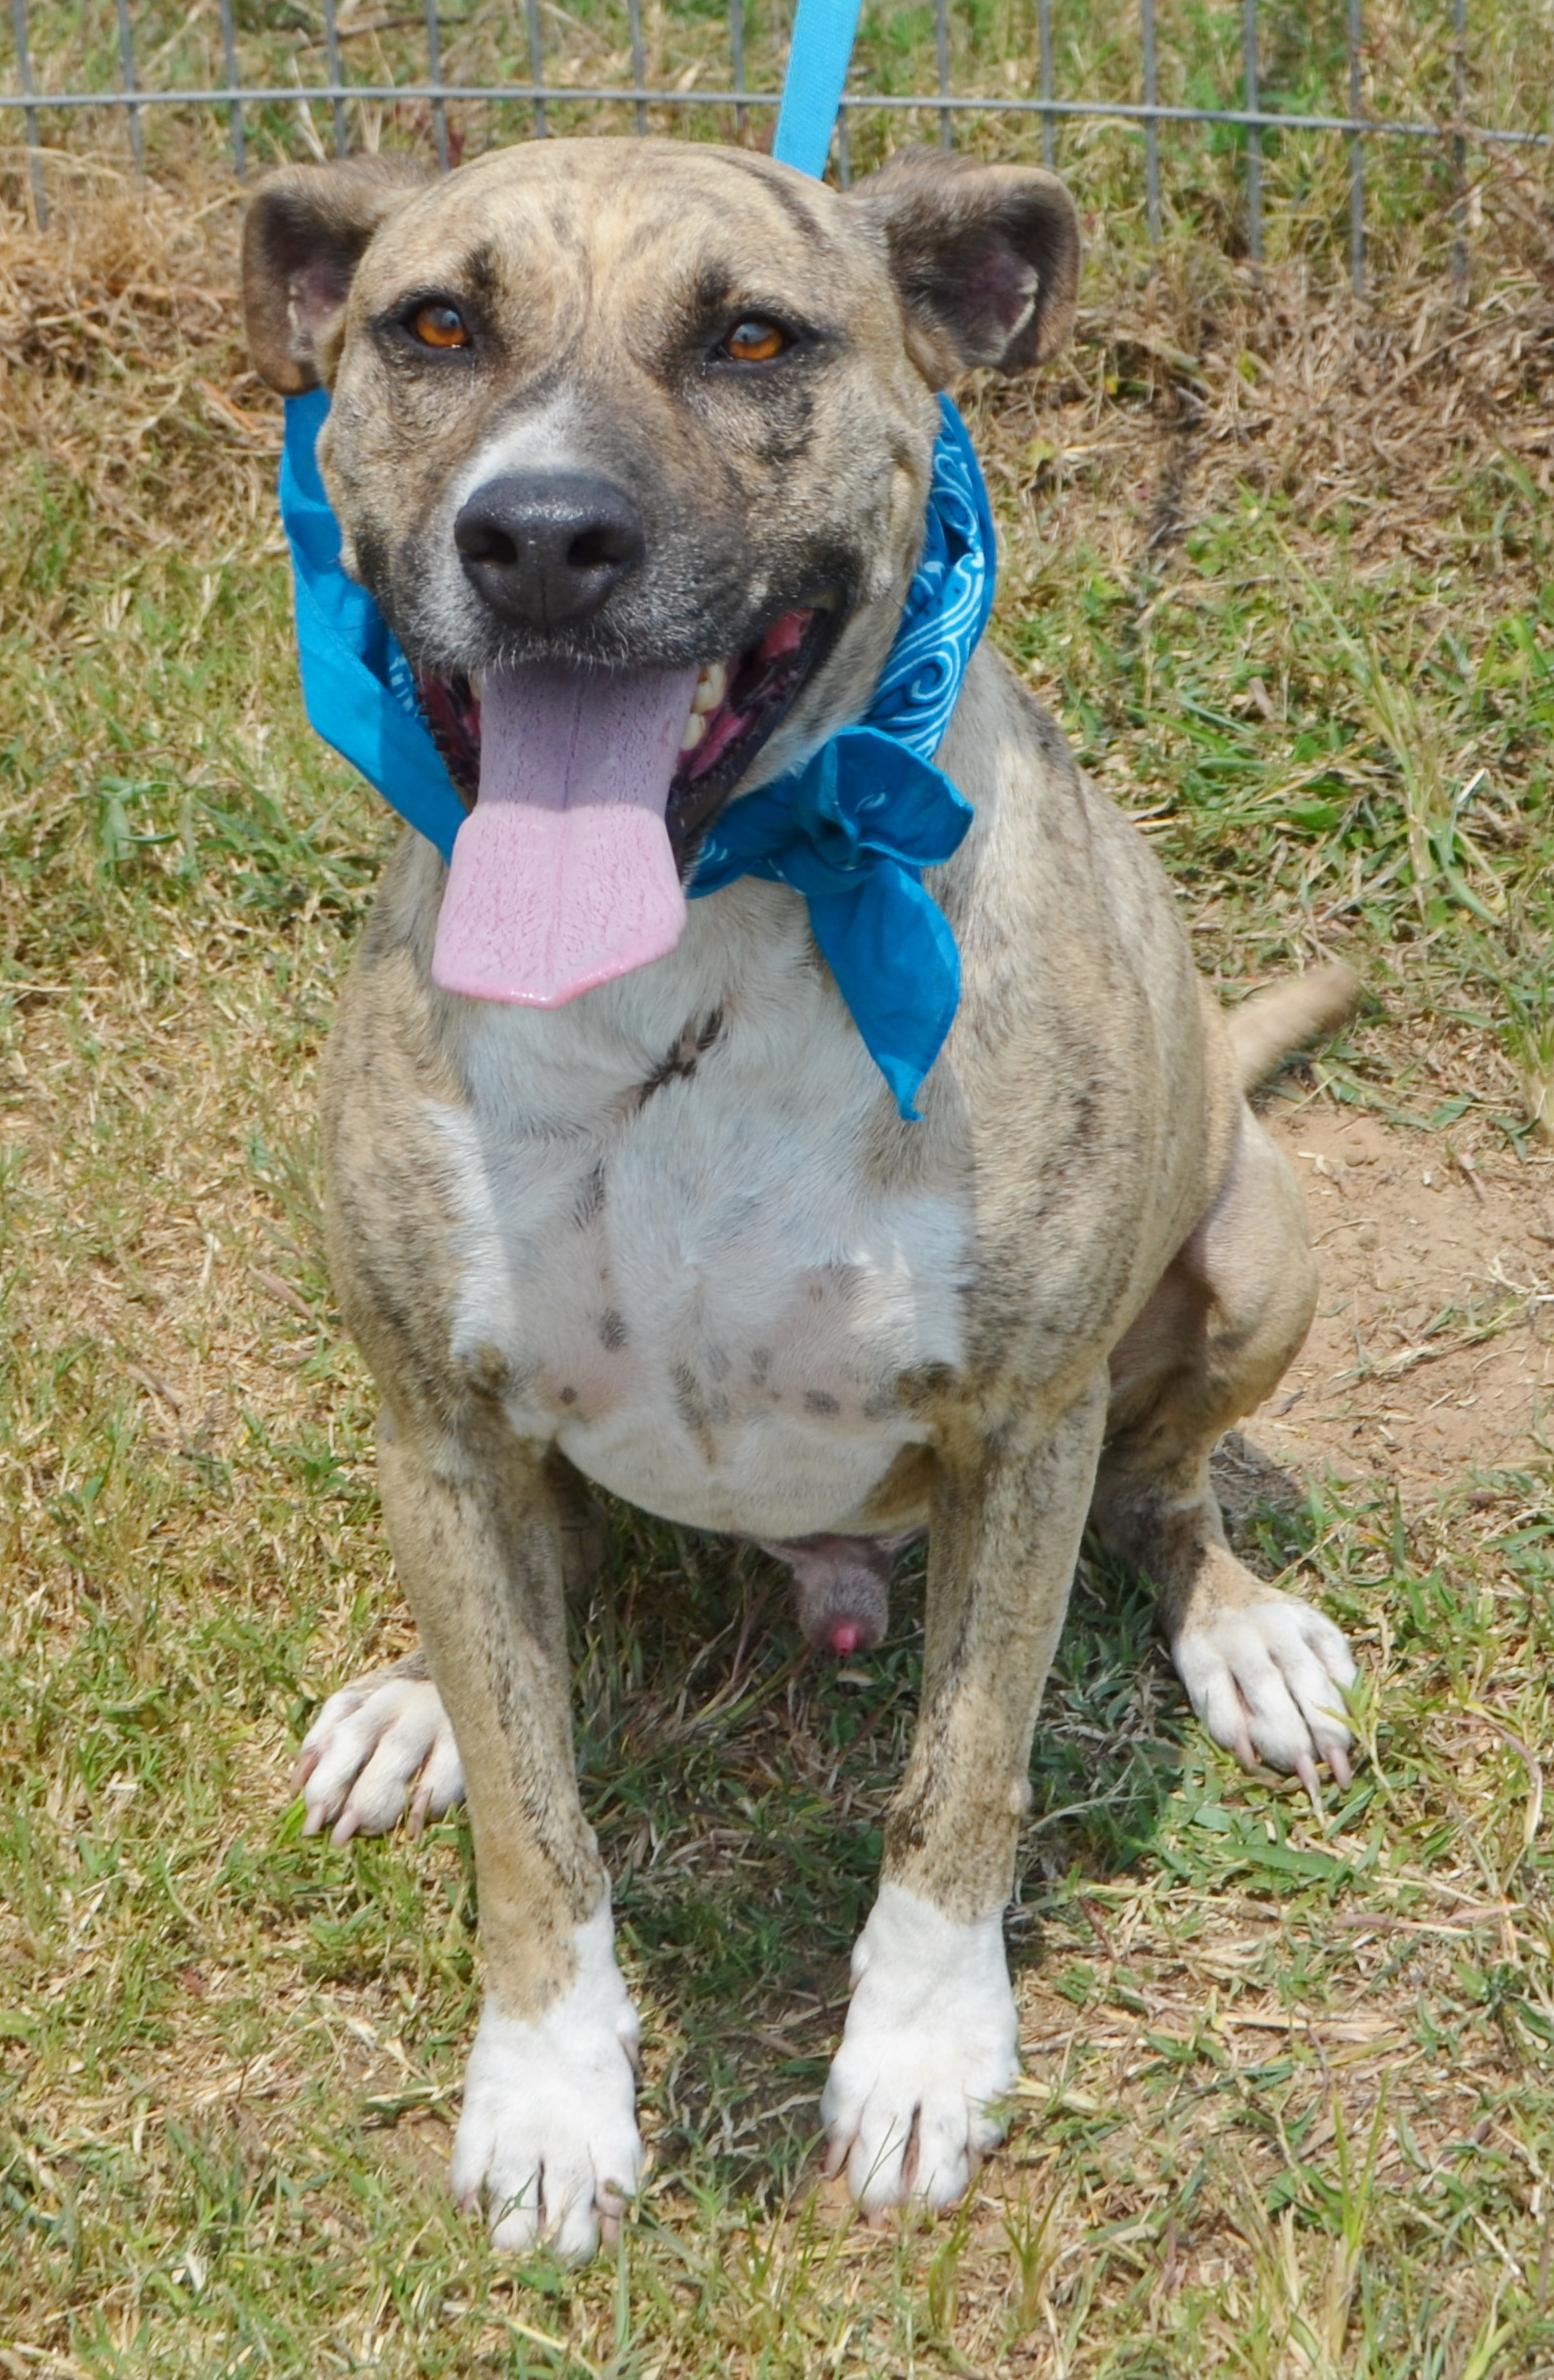 LANCE-GOOD BOY, an adoptable Pit Bull Terrier in Danbury, TX, 77534 | Photo Image 2